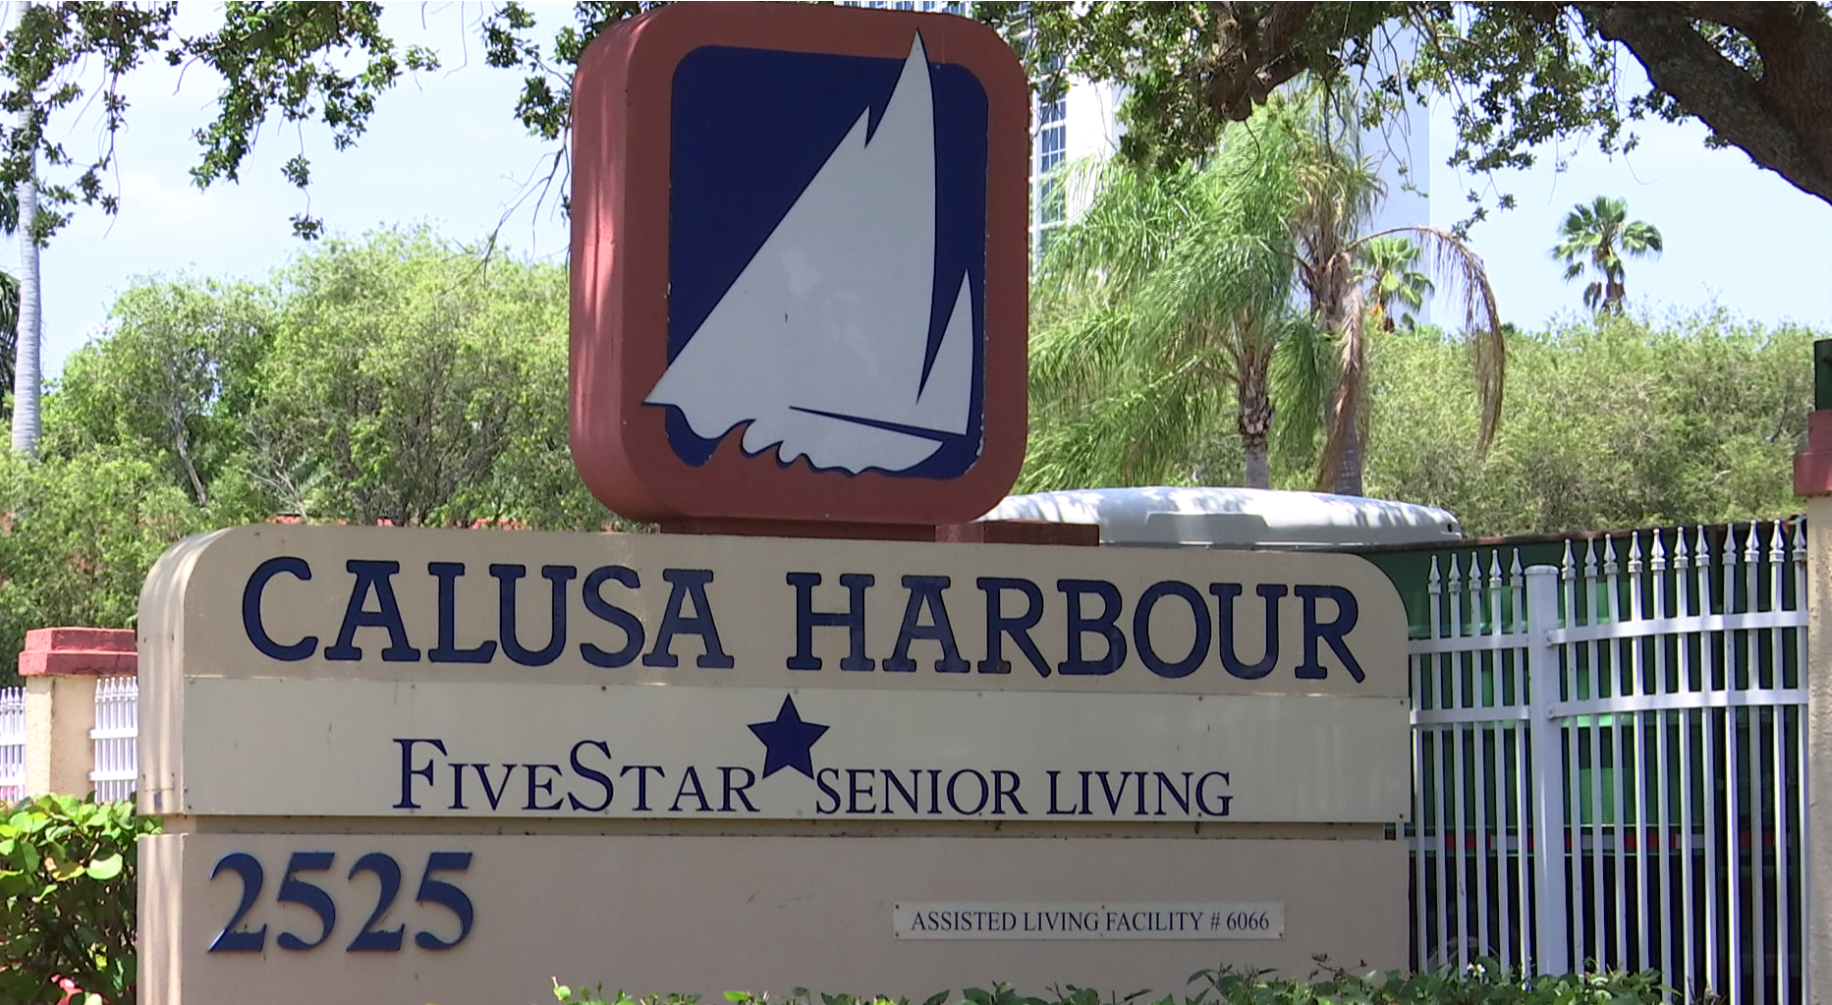 Calusa harbour sign